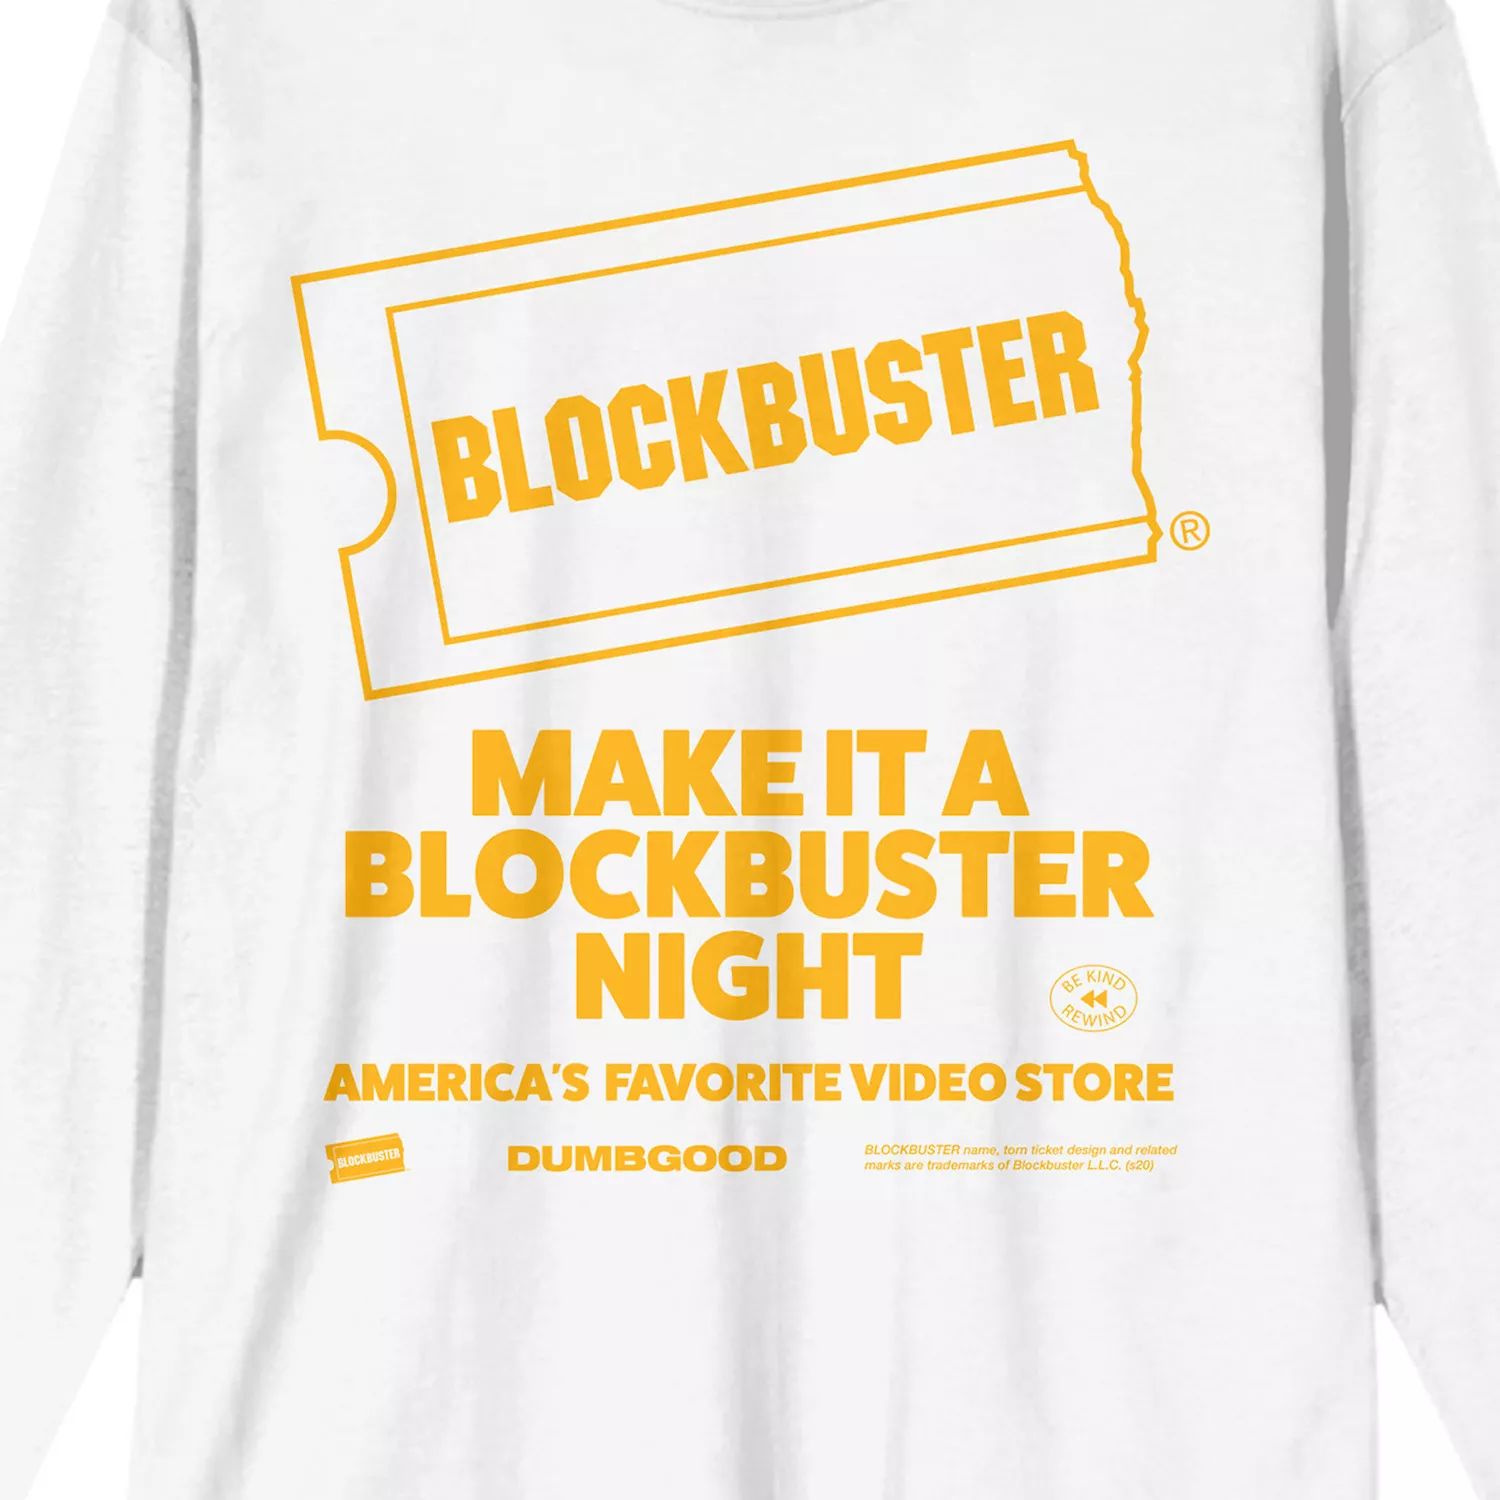 Мужская футболка с длинными рукавами и рисунком Blockbuster Make It a Blockbuster Night Licensed Character